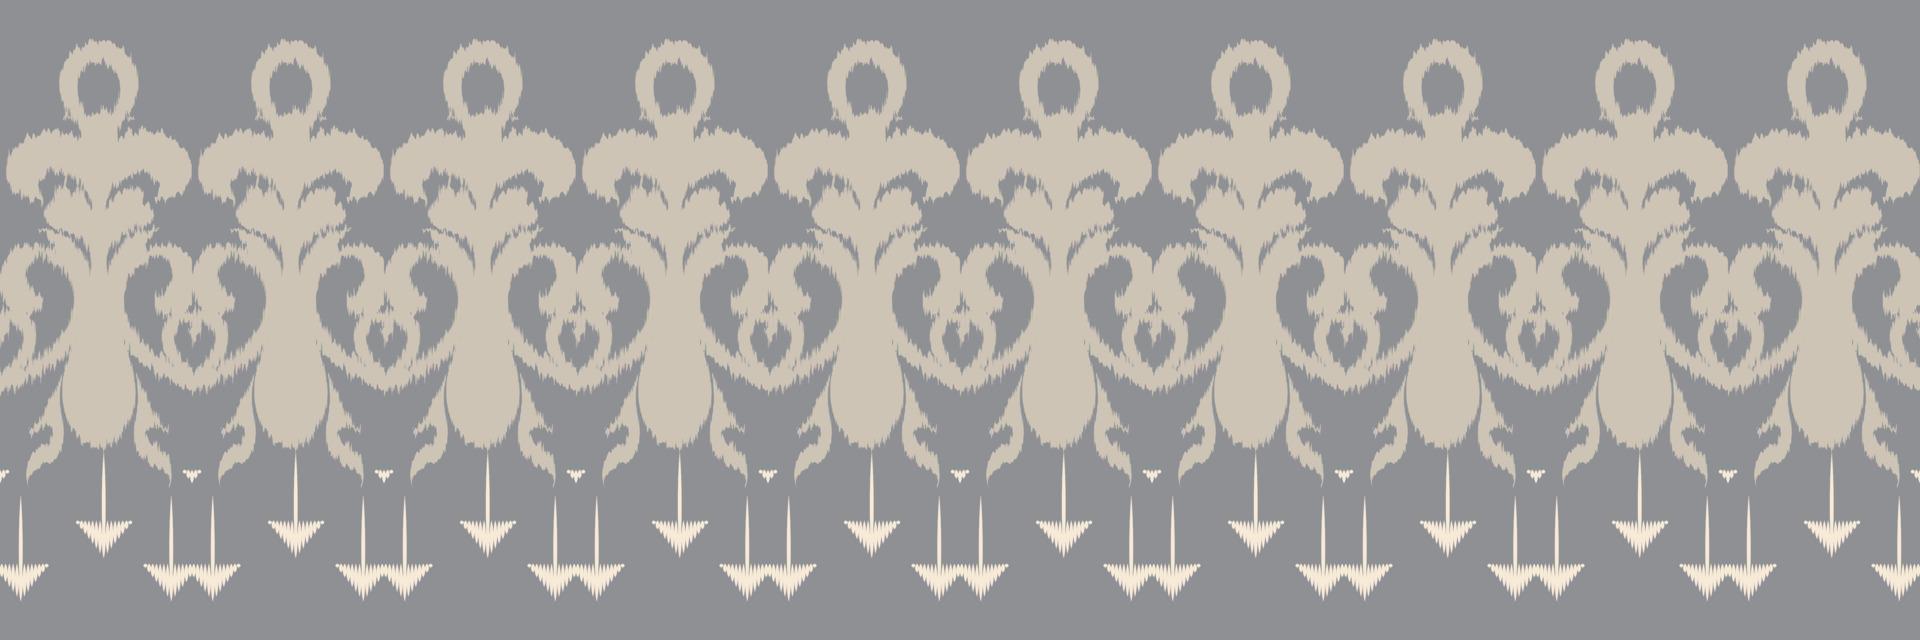 ikat stoff tribal afrika nahtloses muster. ethnische geometrische ikkat batik digitaler vektor textildesign für drucke stoff saree mughal pinsel symbol schwaden textur kurti kurtis kurtas